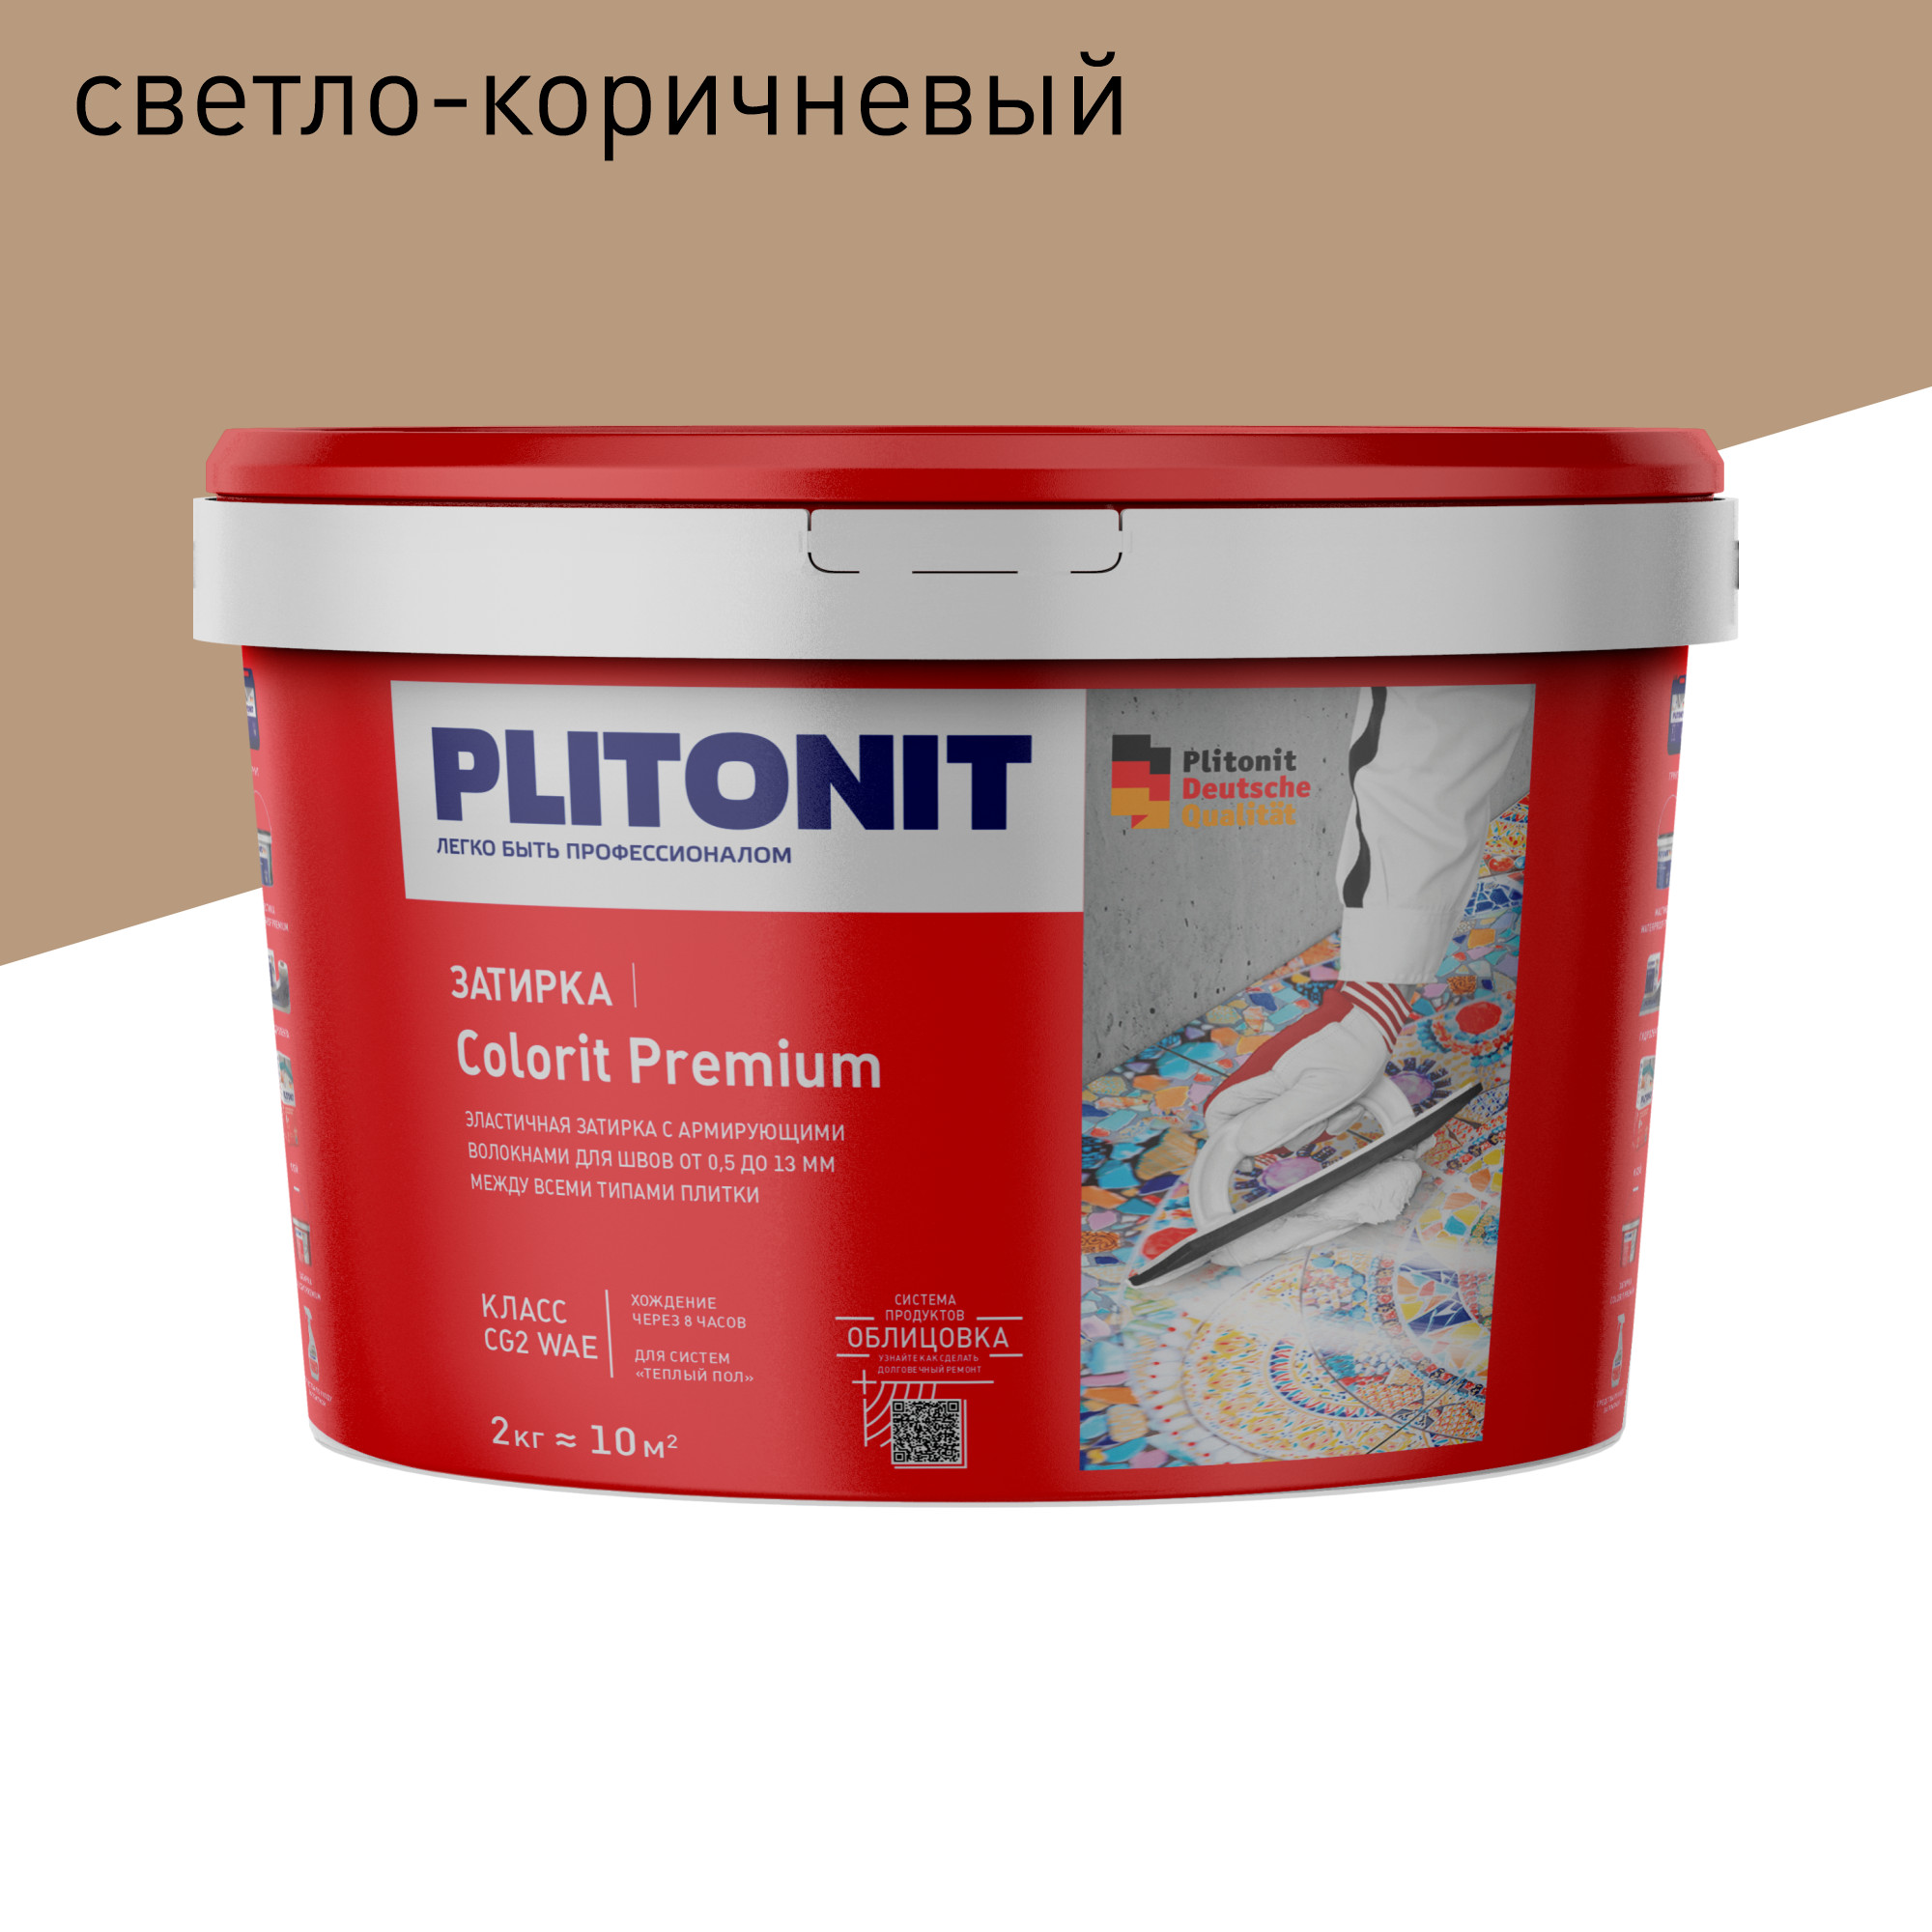 Затирка PLITONIT Colorit Premium светло-коричневая 2 кг затирка plitonit colorit premium светло серая 2 кг